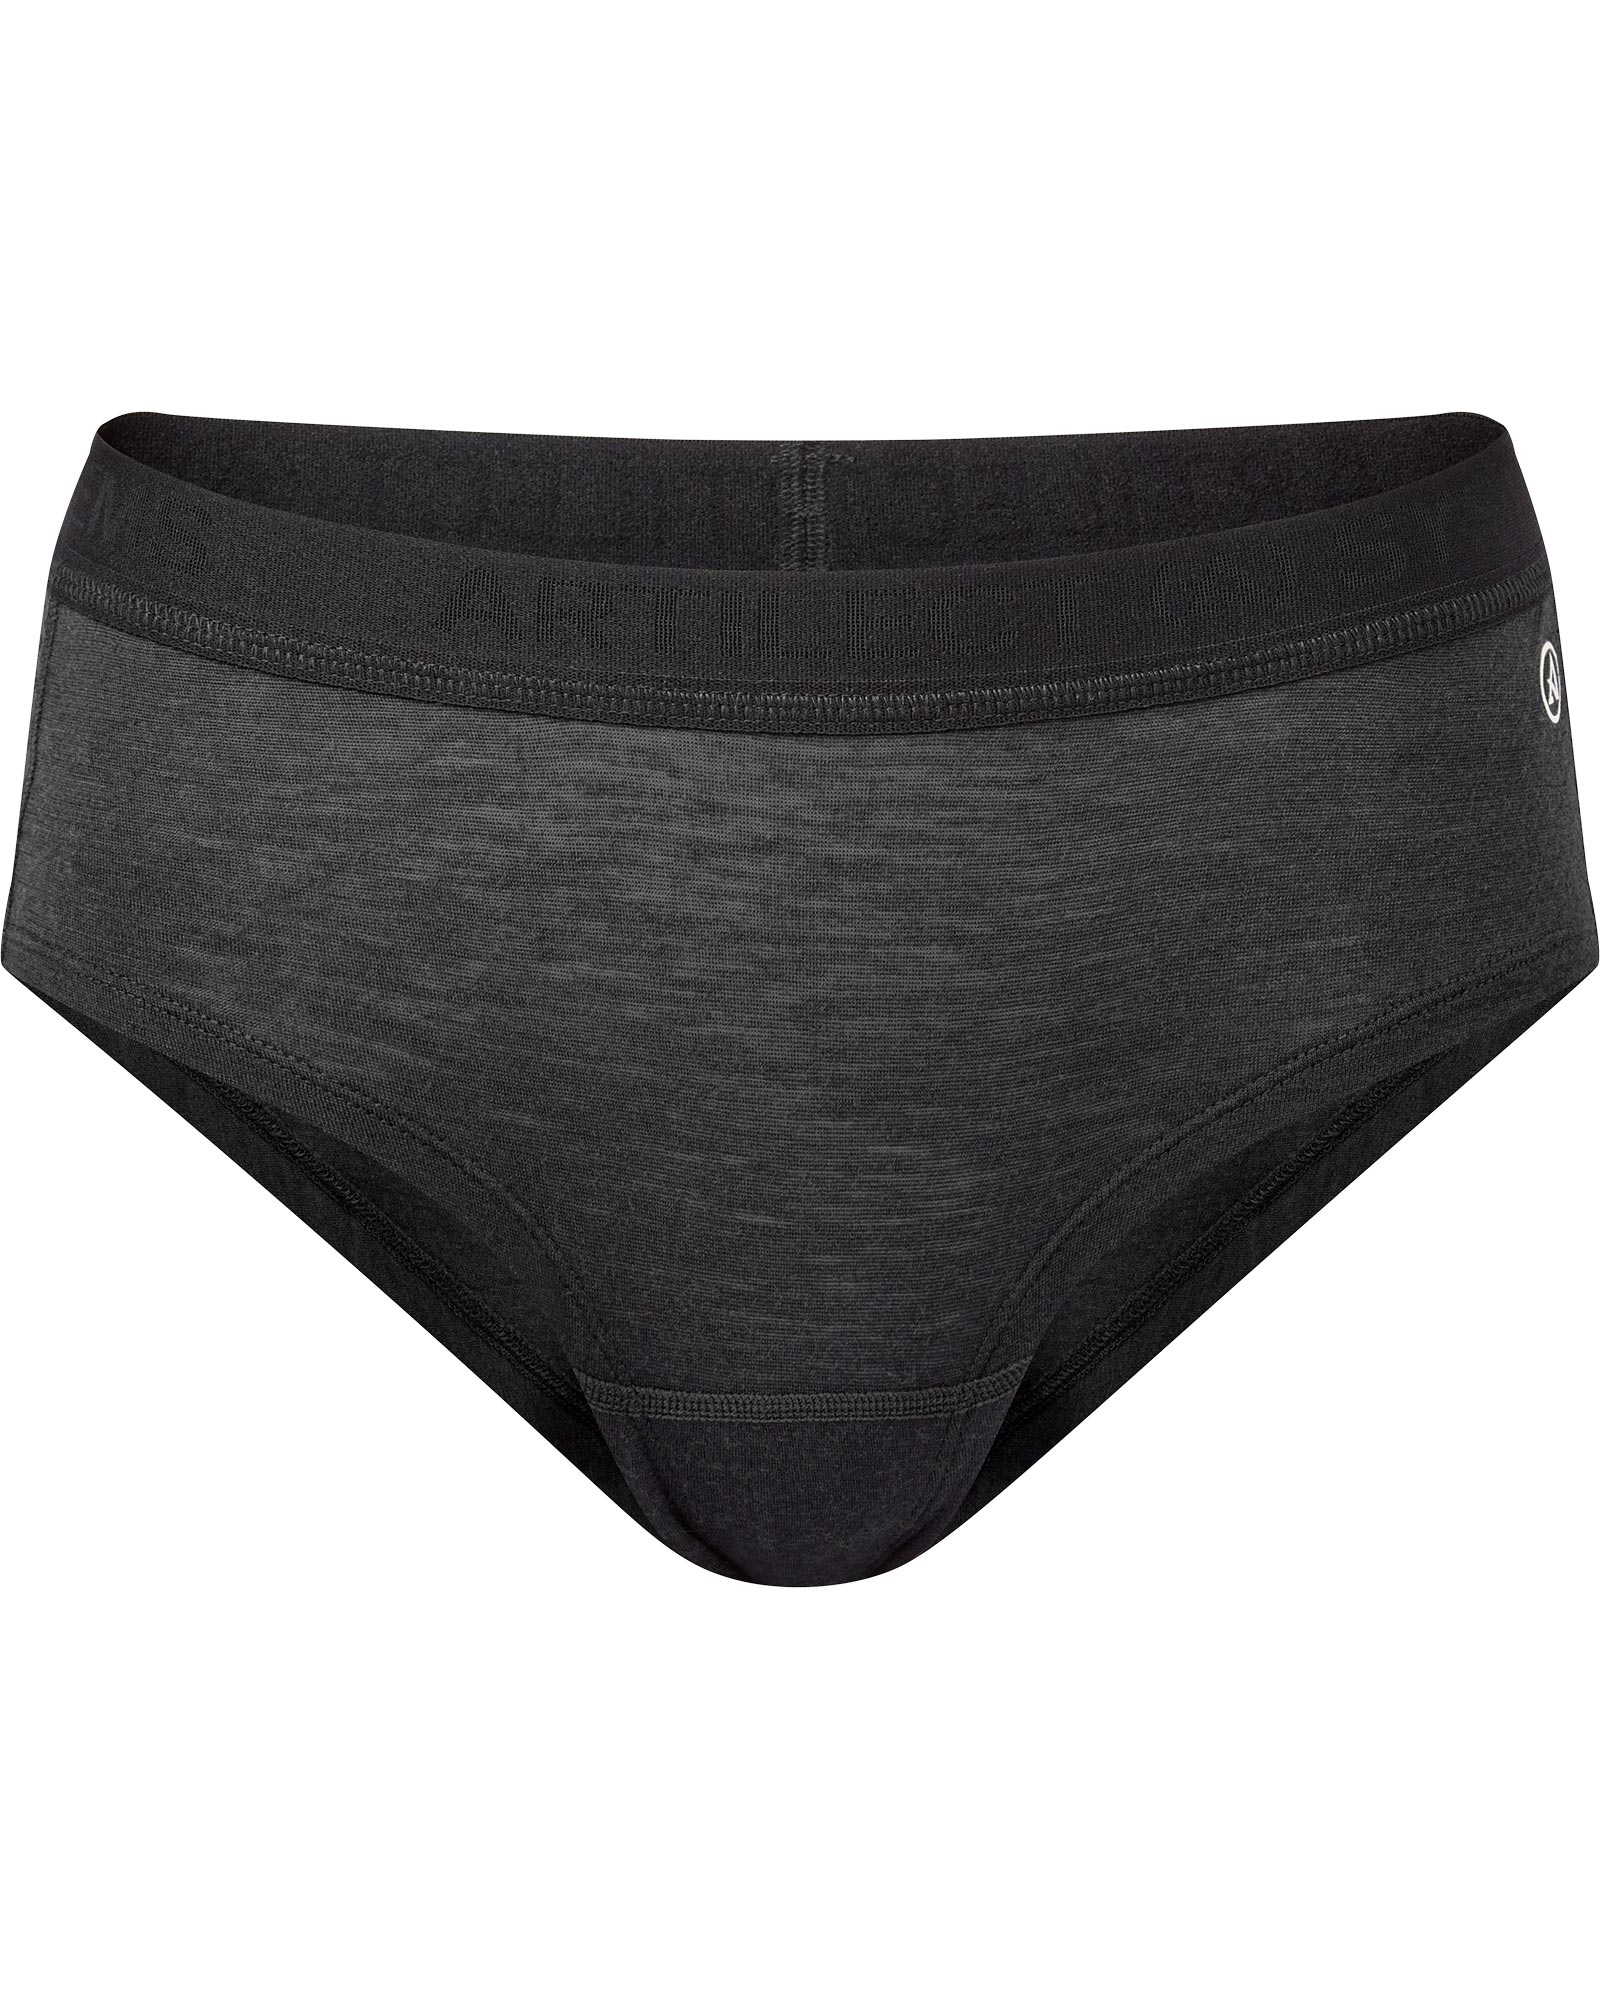 Artilect Boulder 125 Women’s Merino Hot Pants - black S